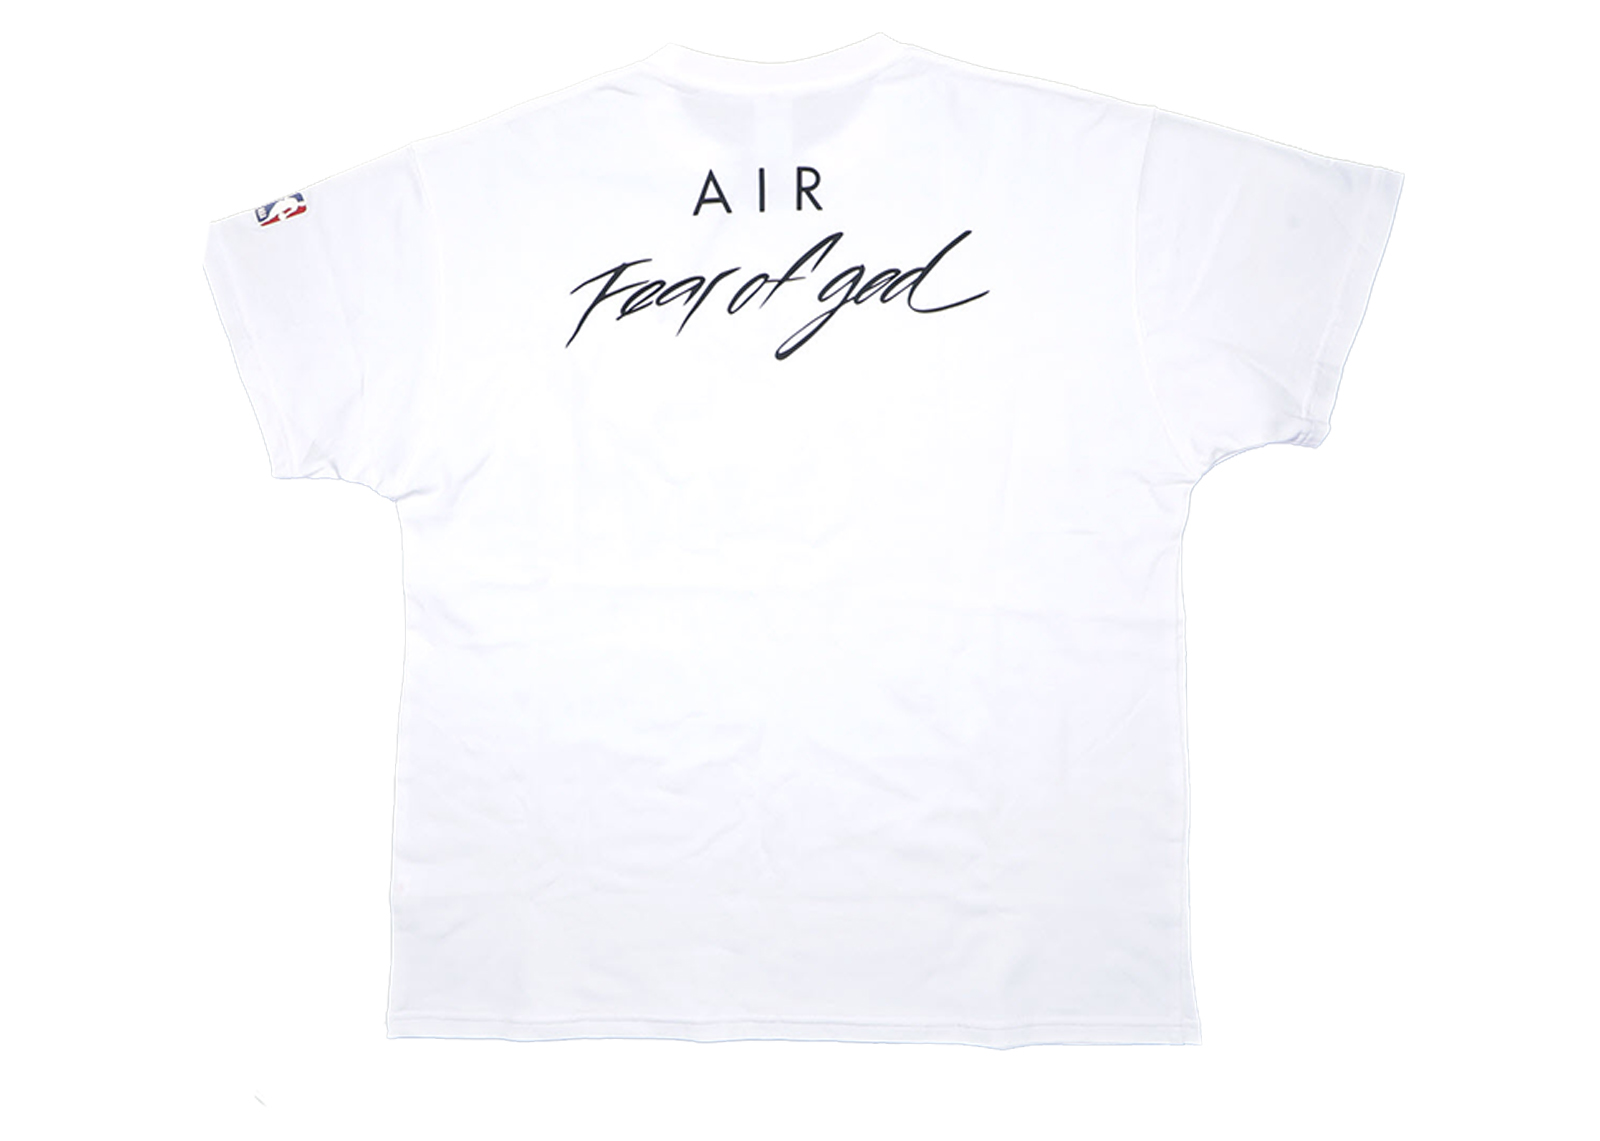 air fear of god apparel